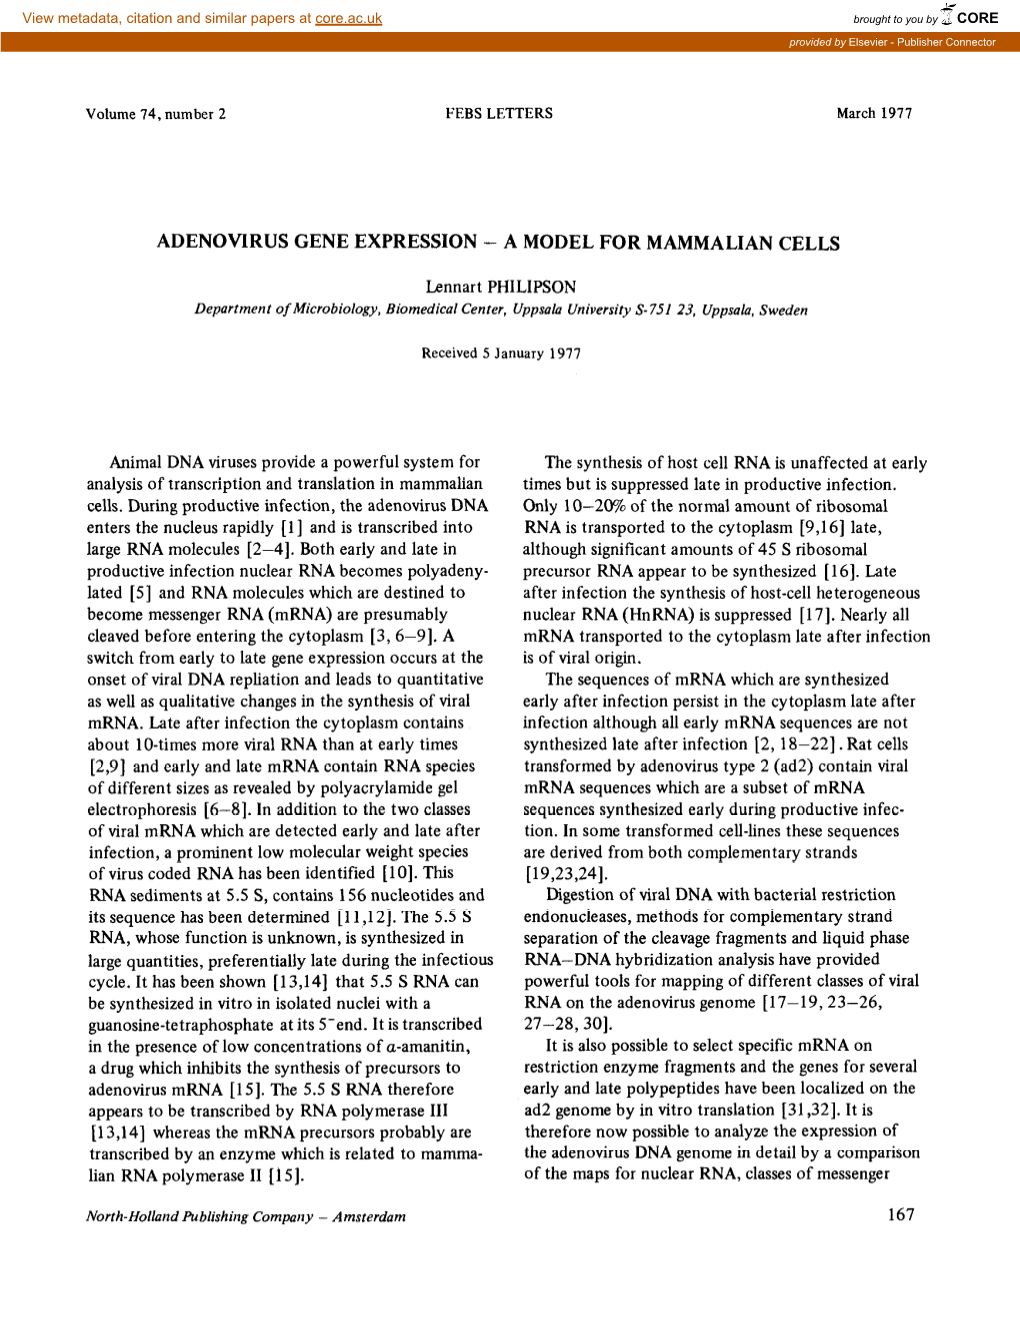 Adenovirus Gene Expression - a Model for Mammalian Cells